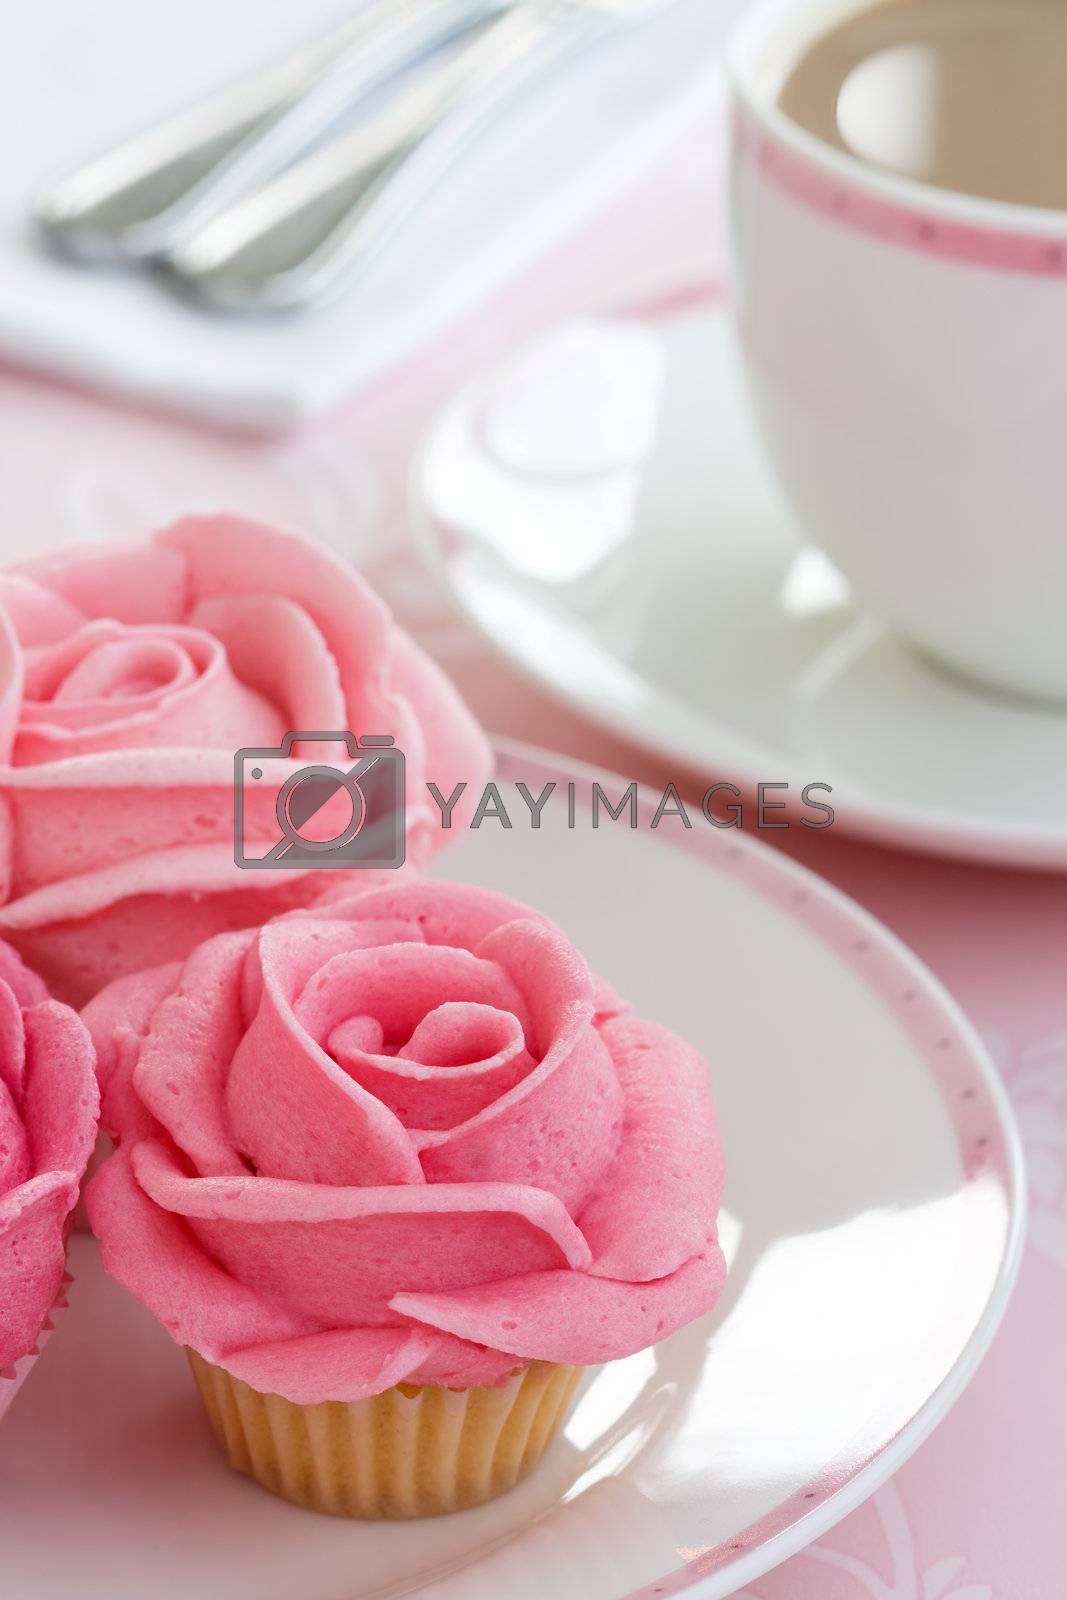 Royalty free image of Rose cupcakes by RuthBlack